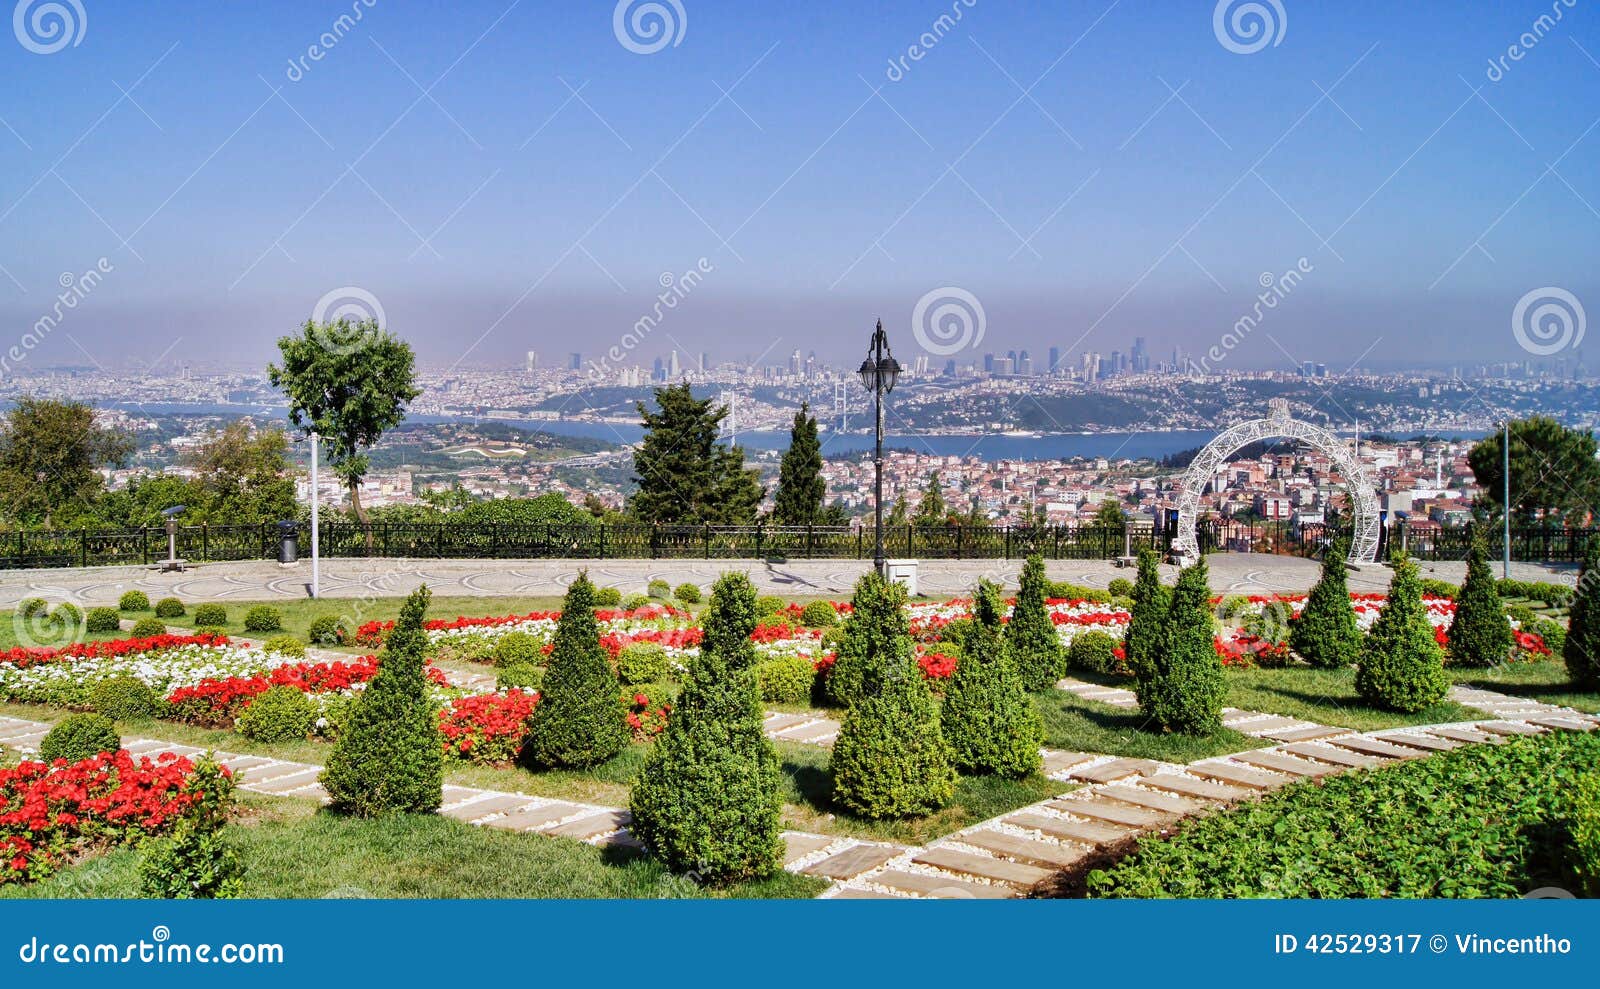 istanbul camlica hill overview bosphorus bridge